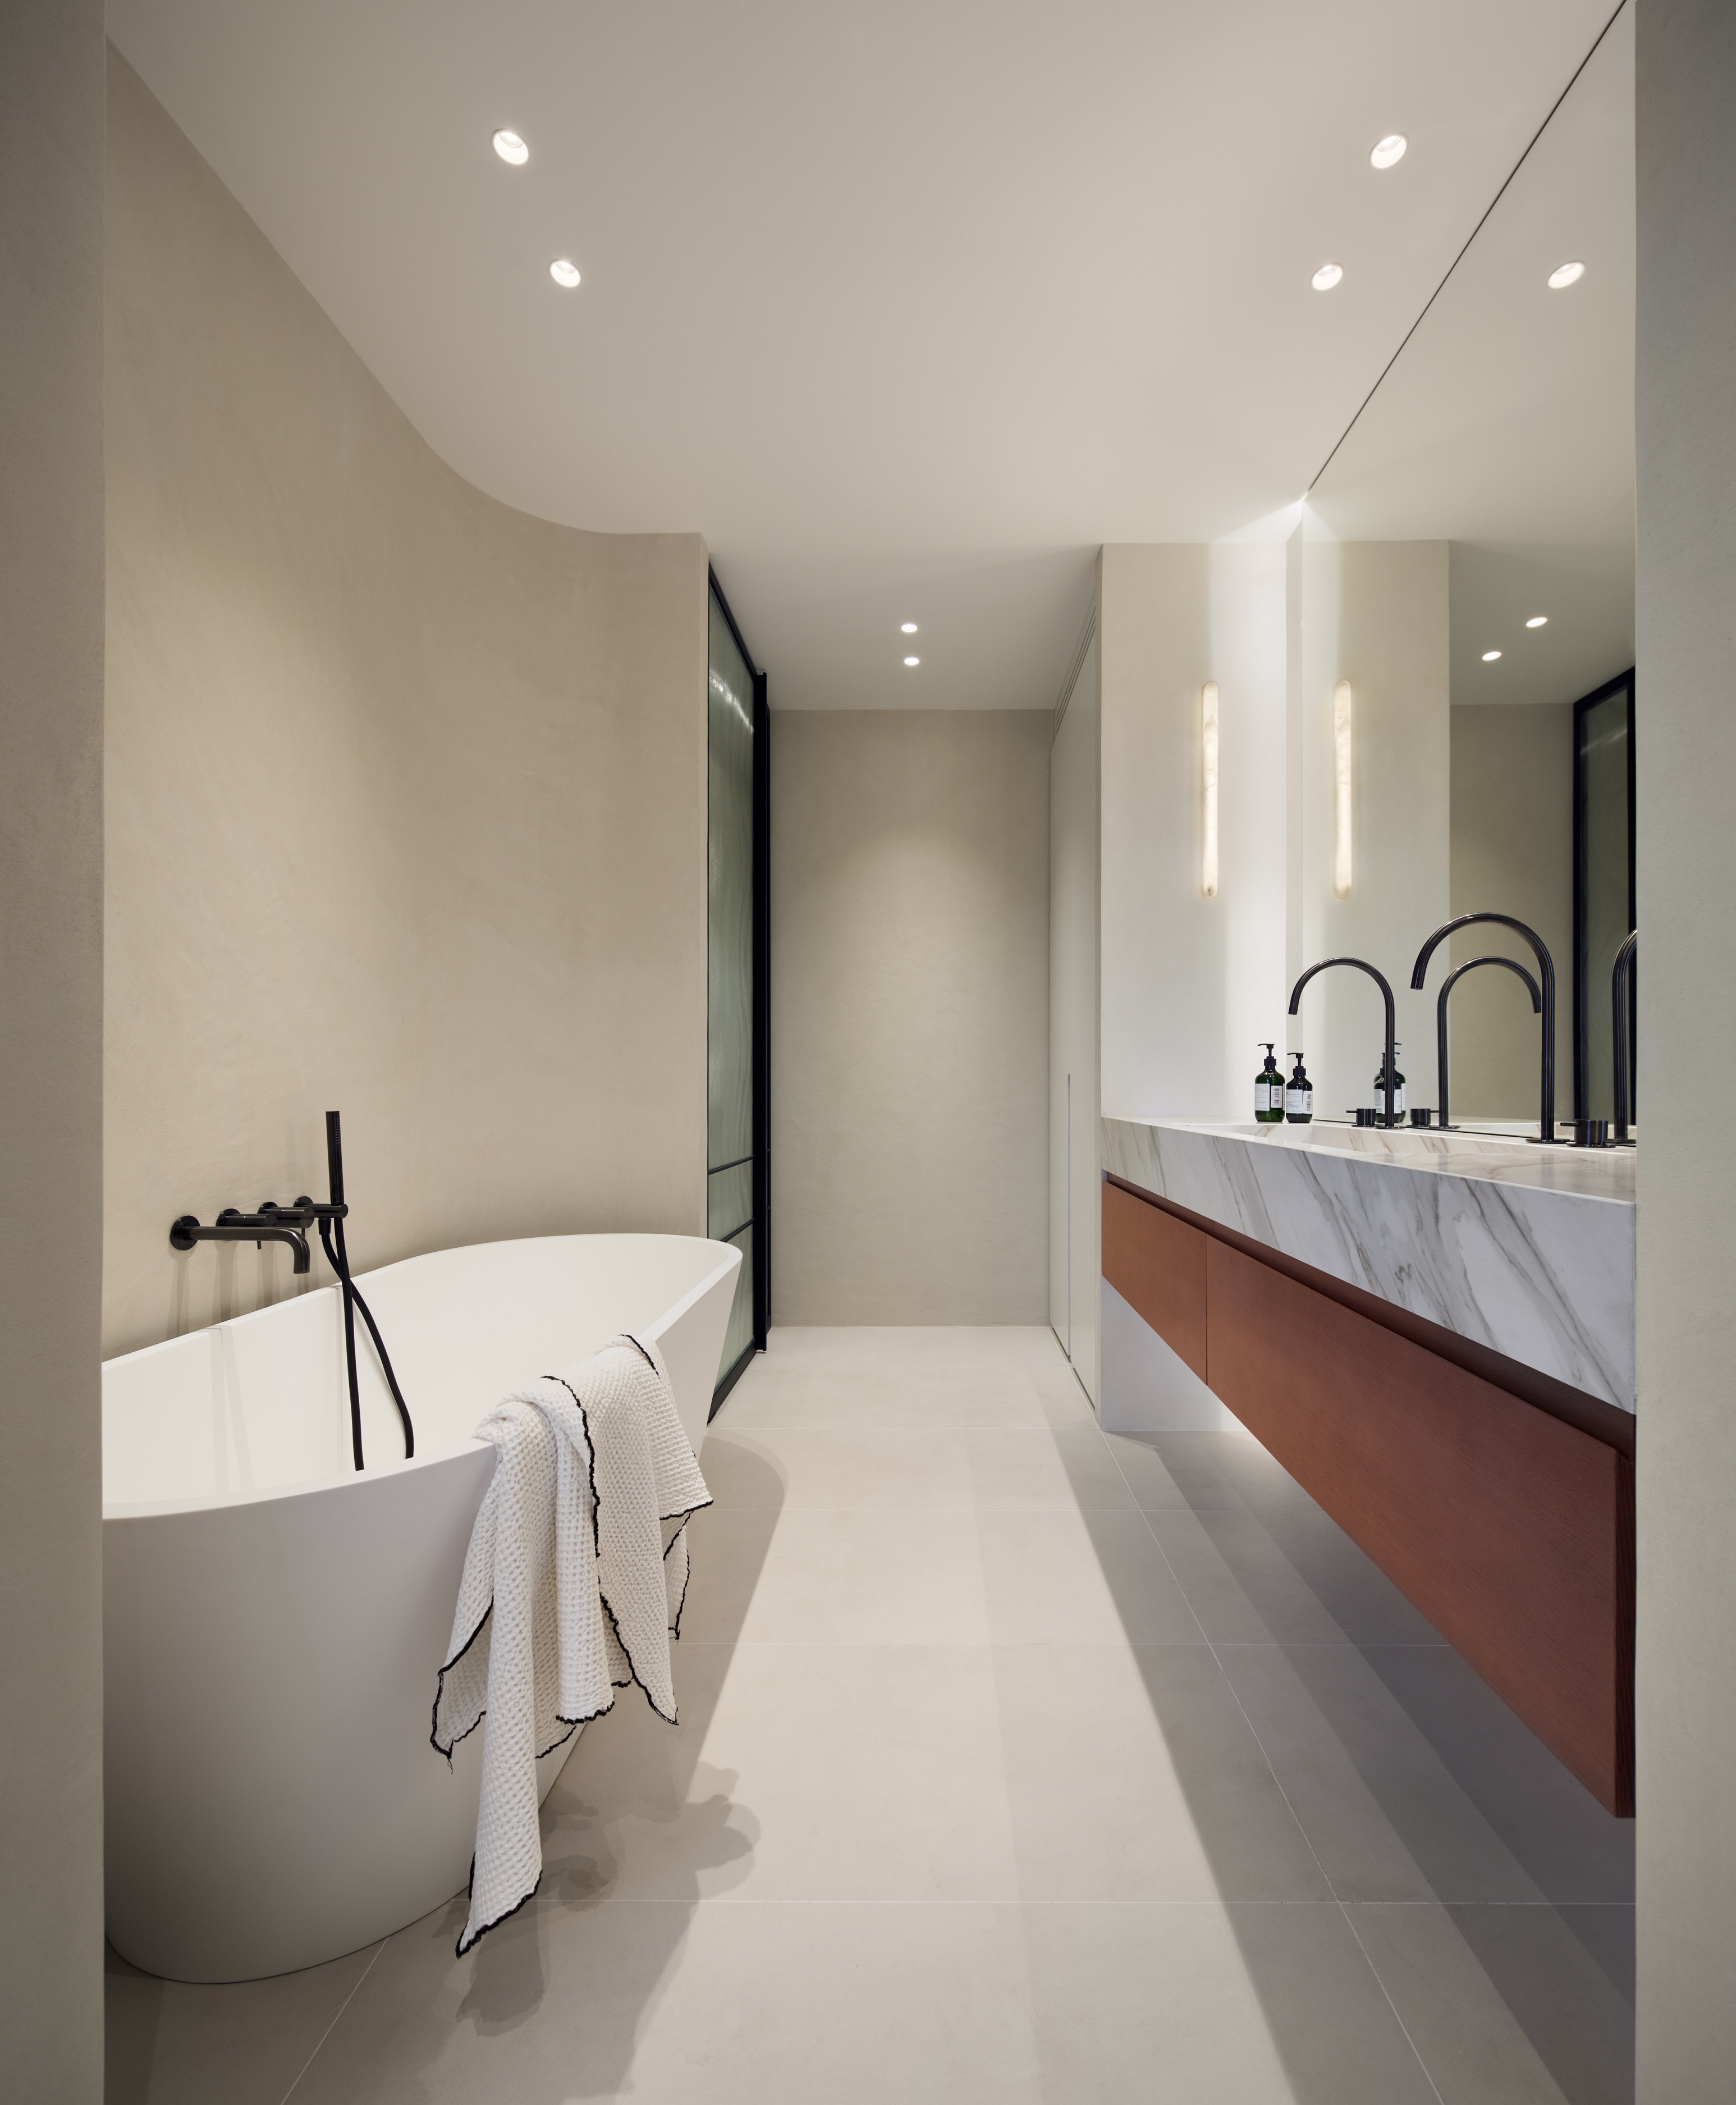 Pedralbes AV. Penthouse LUV Studio Master Bathroom 2 - LUV Studio - Arquitectura y diseño - Barcelona